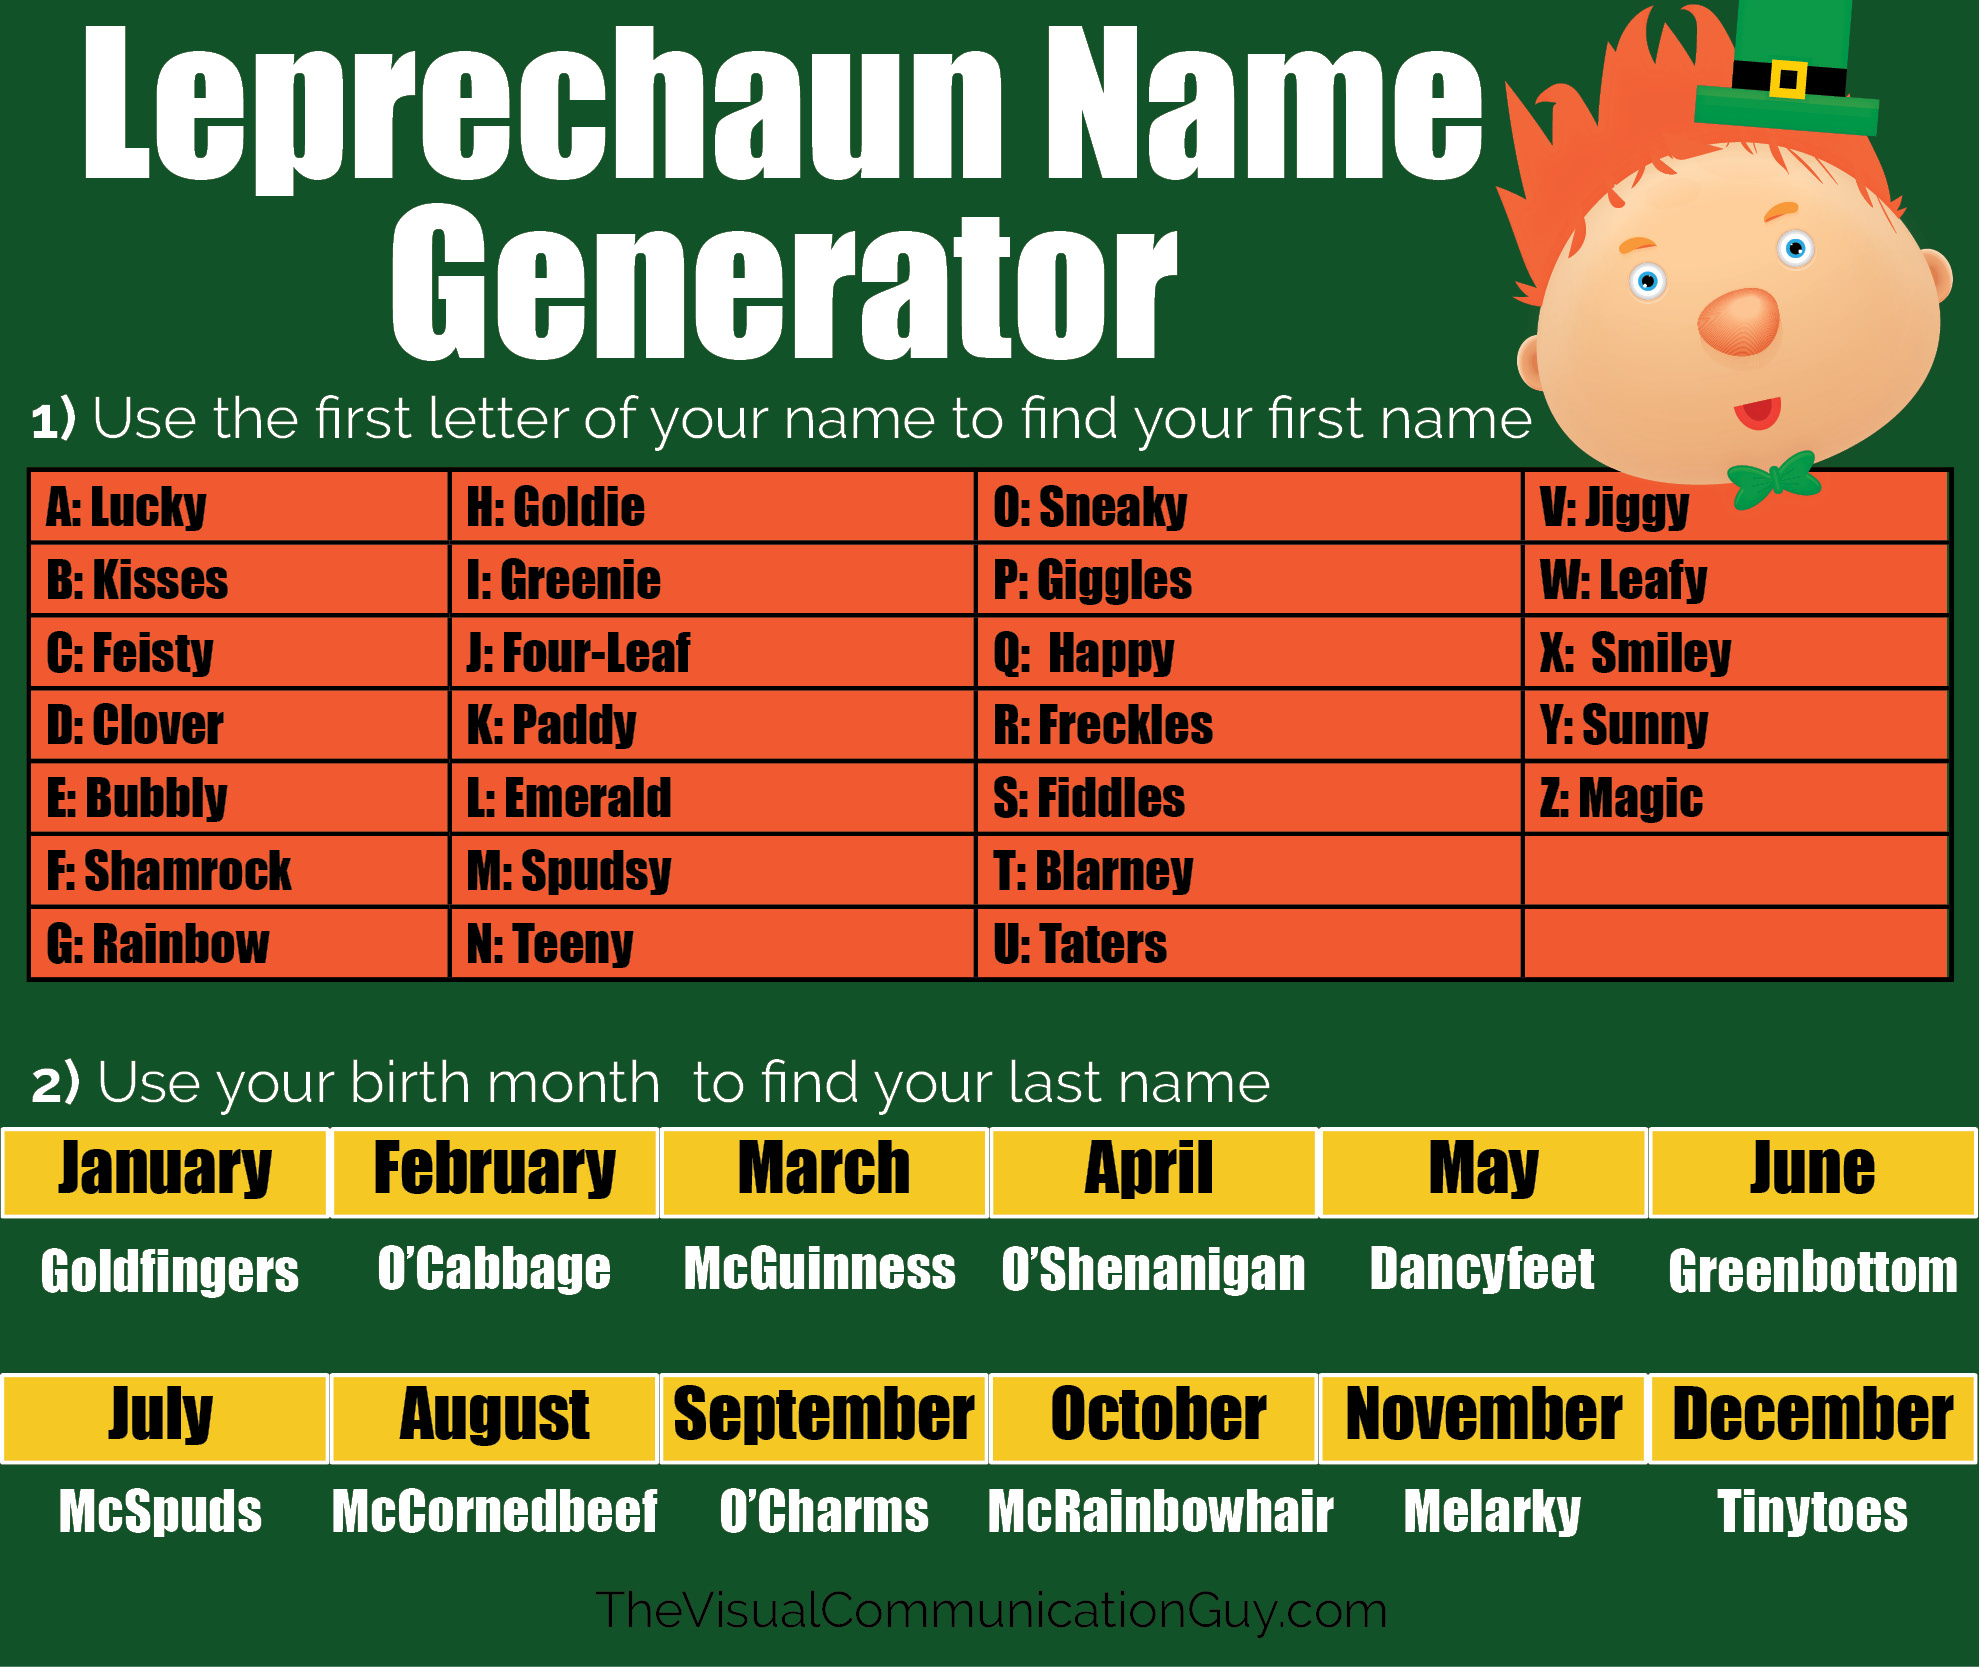 Leprechaun name generator whats your leprechaun name â the visual munication guy